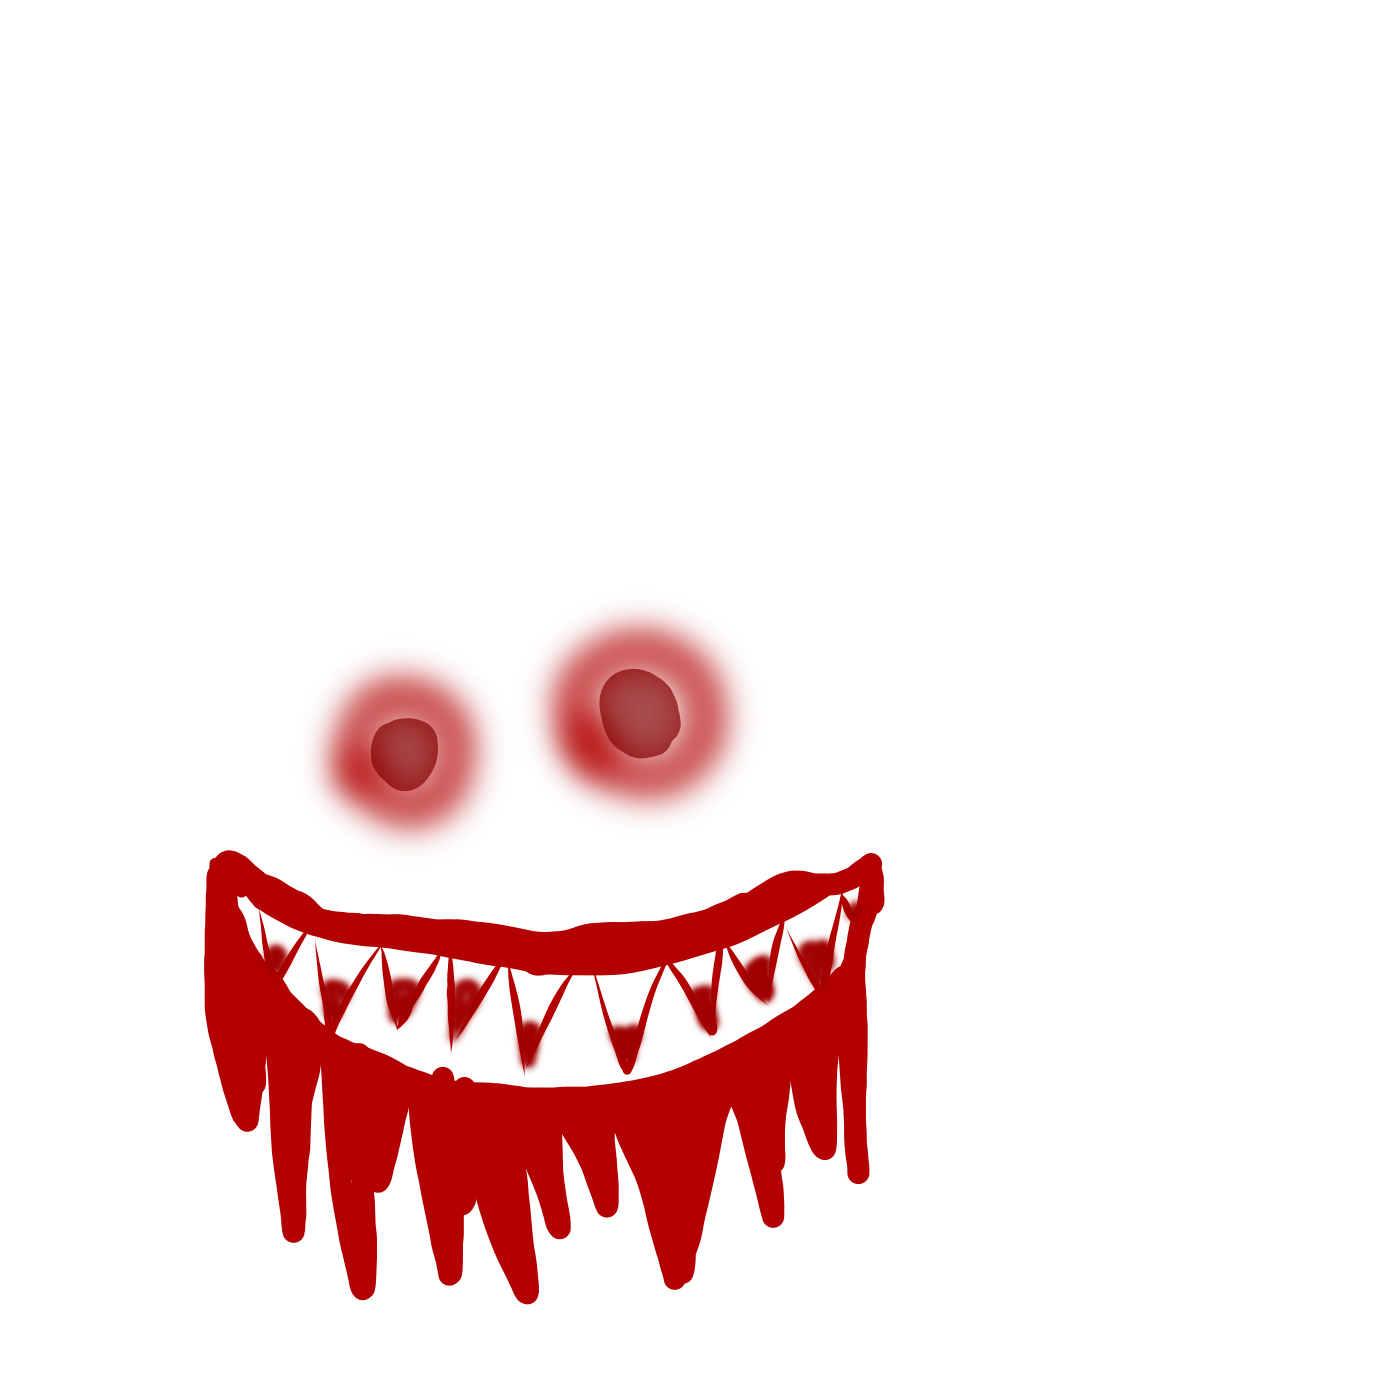 The Red Smile | Doors Ideas Wiki | Fandom